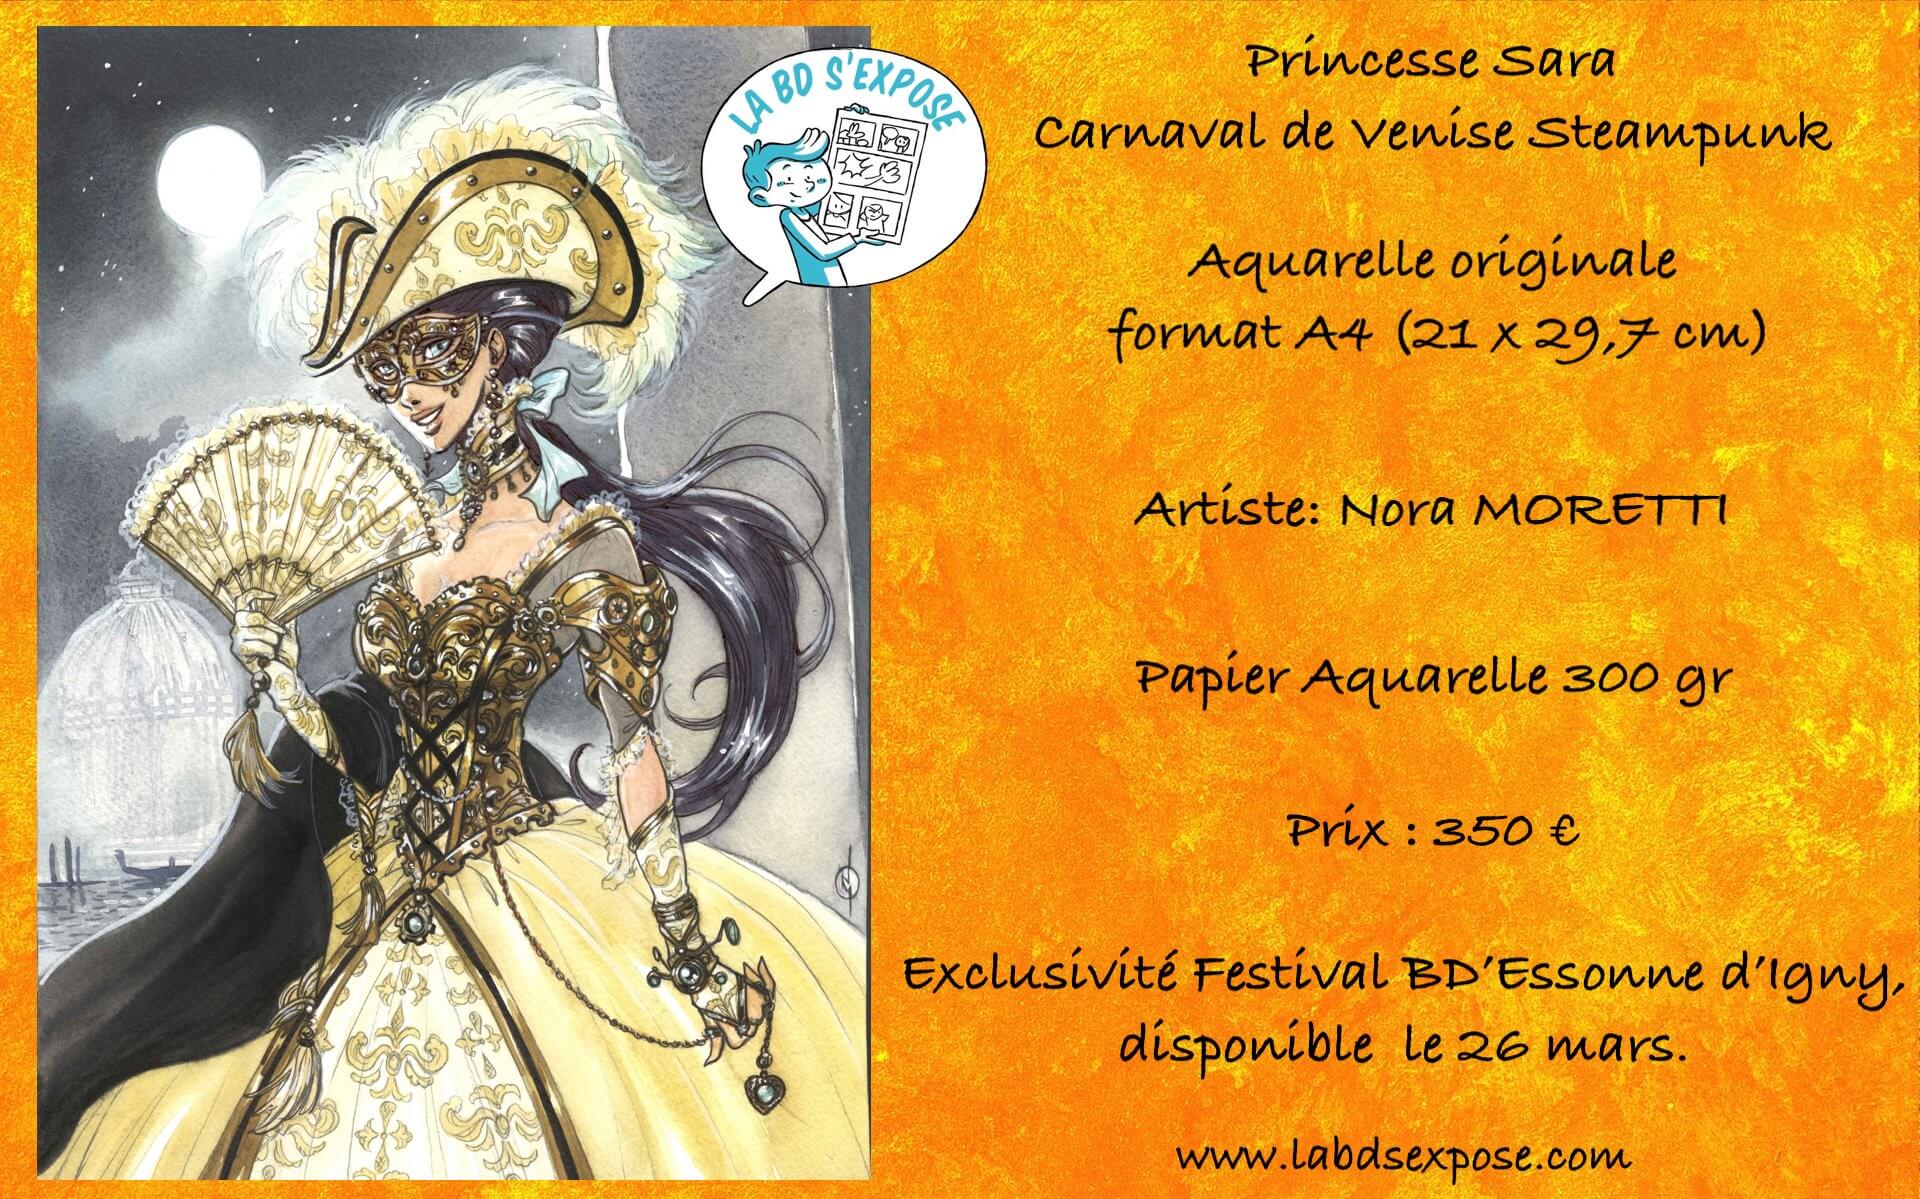 Réseaux exclu Igny aquarelle originale Princesse Sara Carnaval de Venise Steampunk Nora Moretti